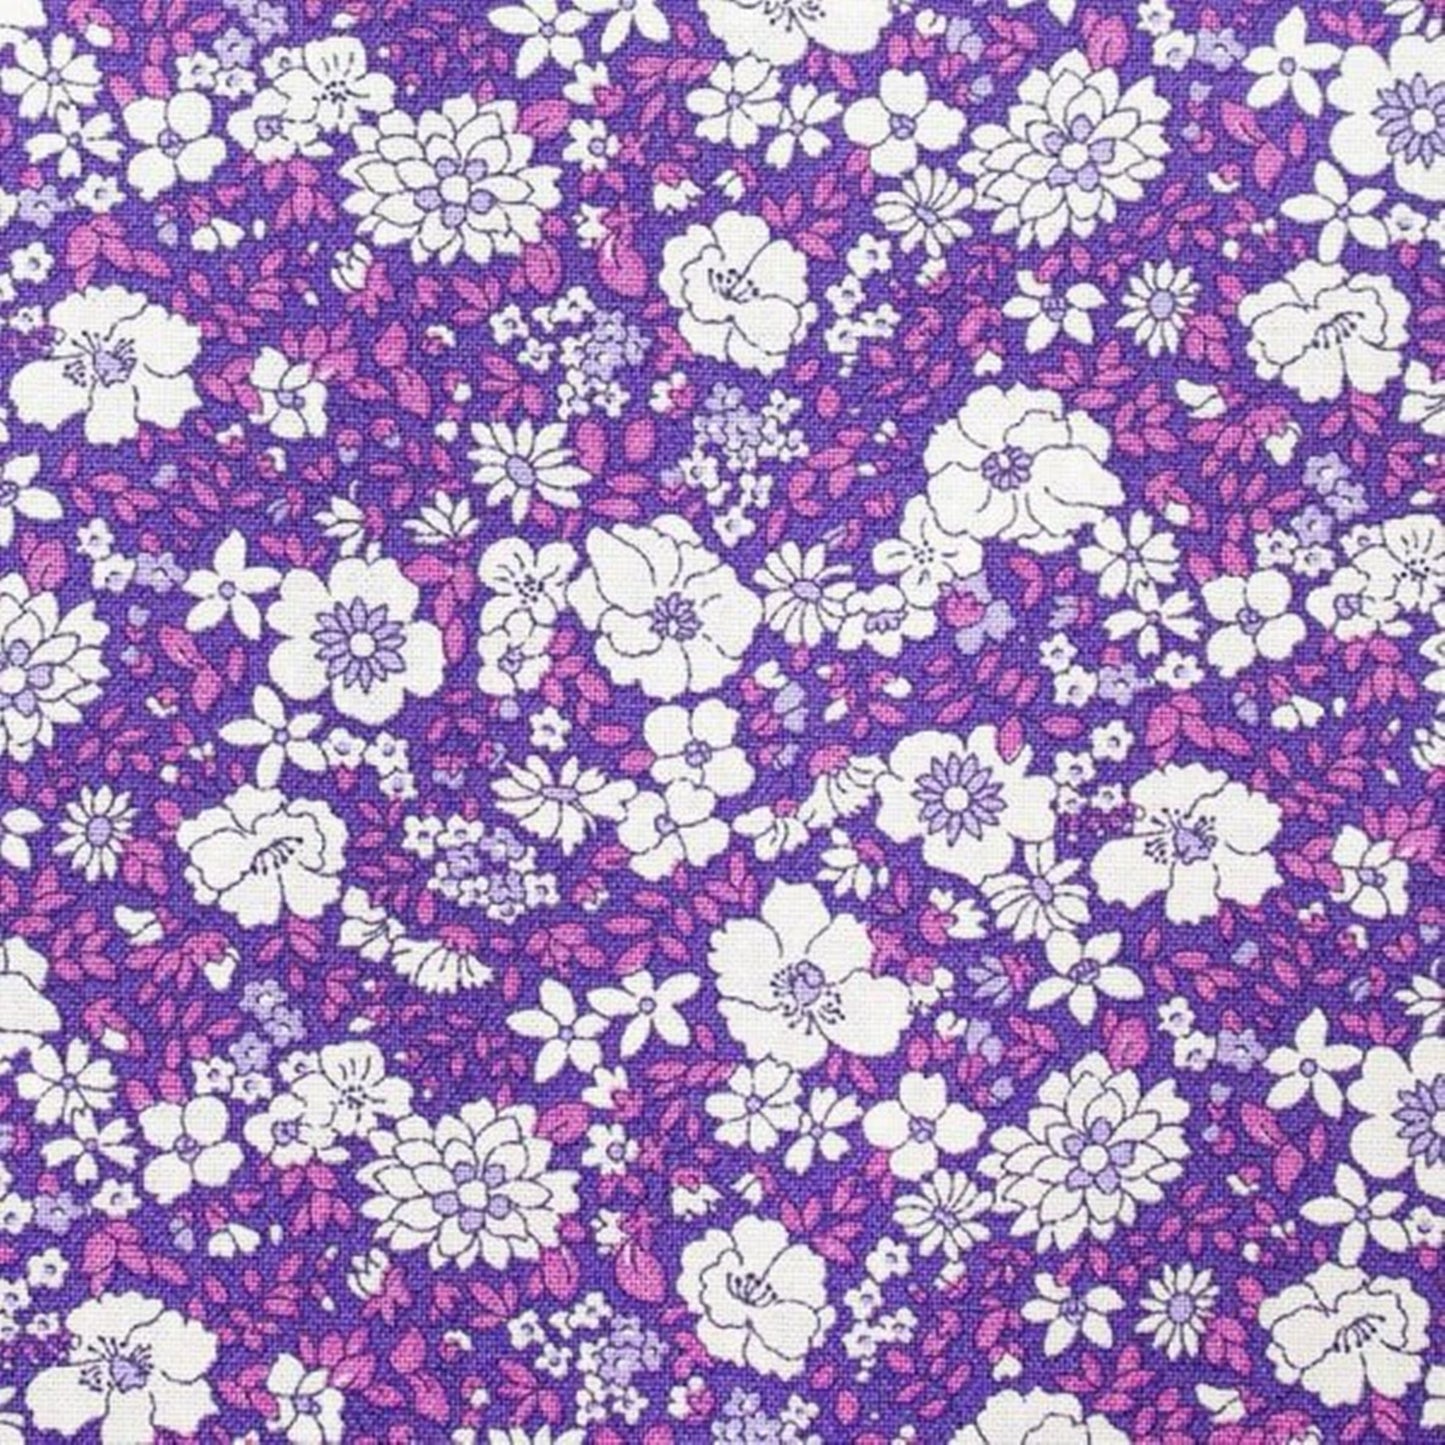 Liberty Flower Show Botanical Jewel Arley Blossom cotton quilt fabric